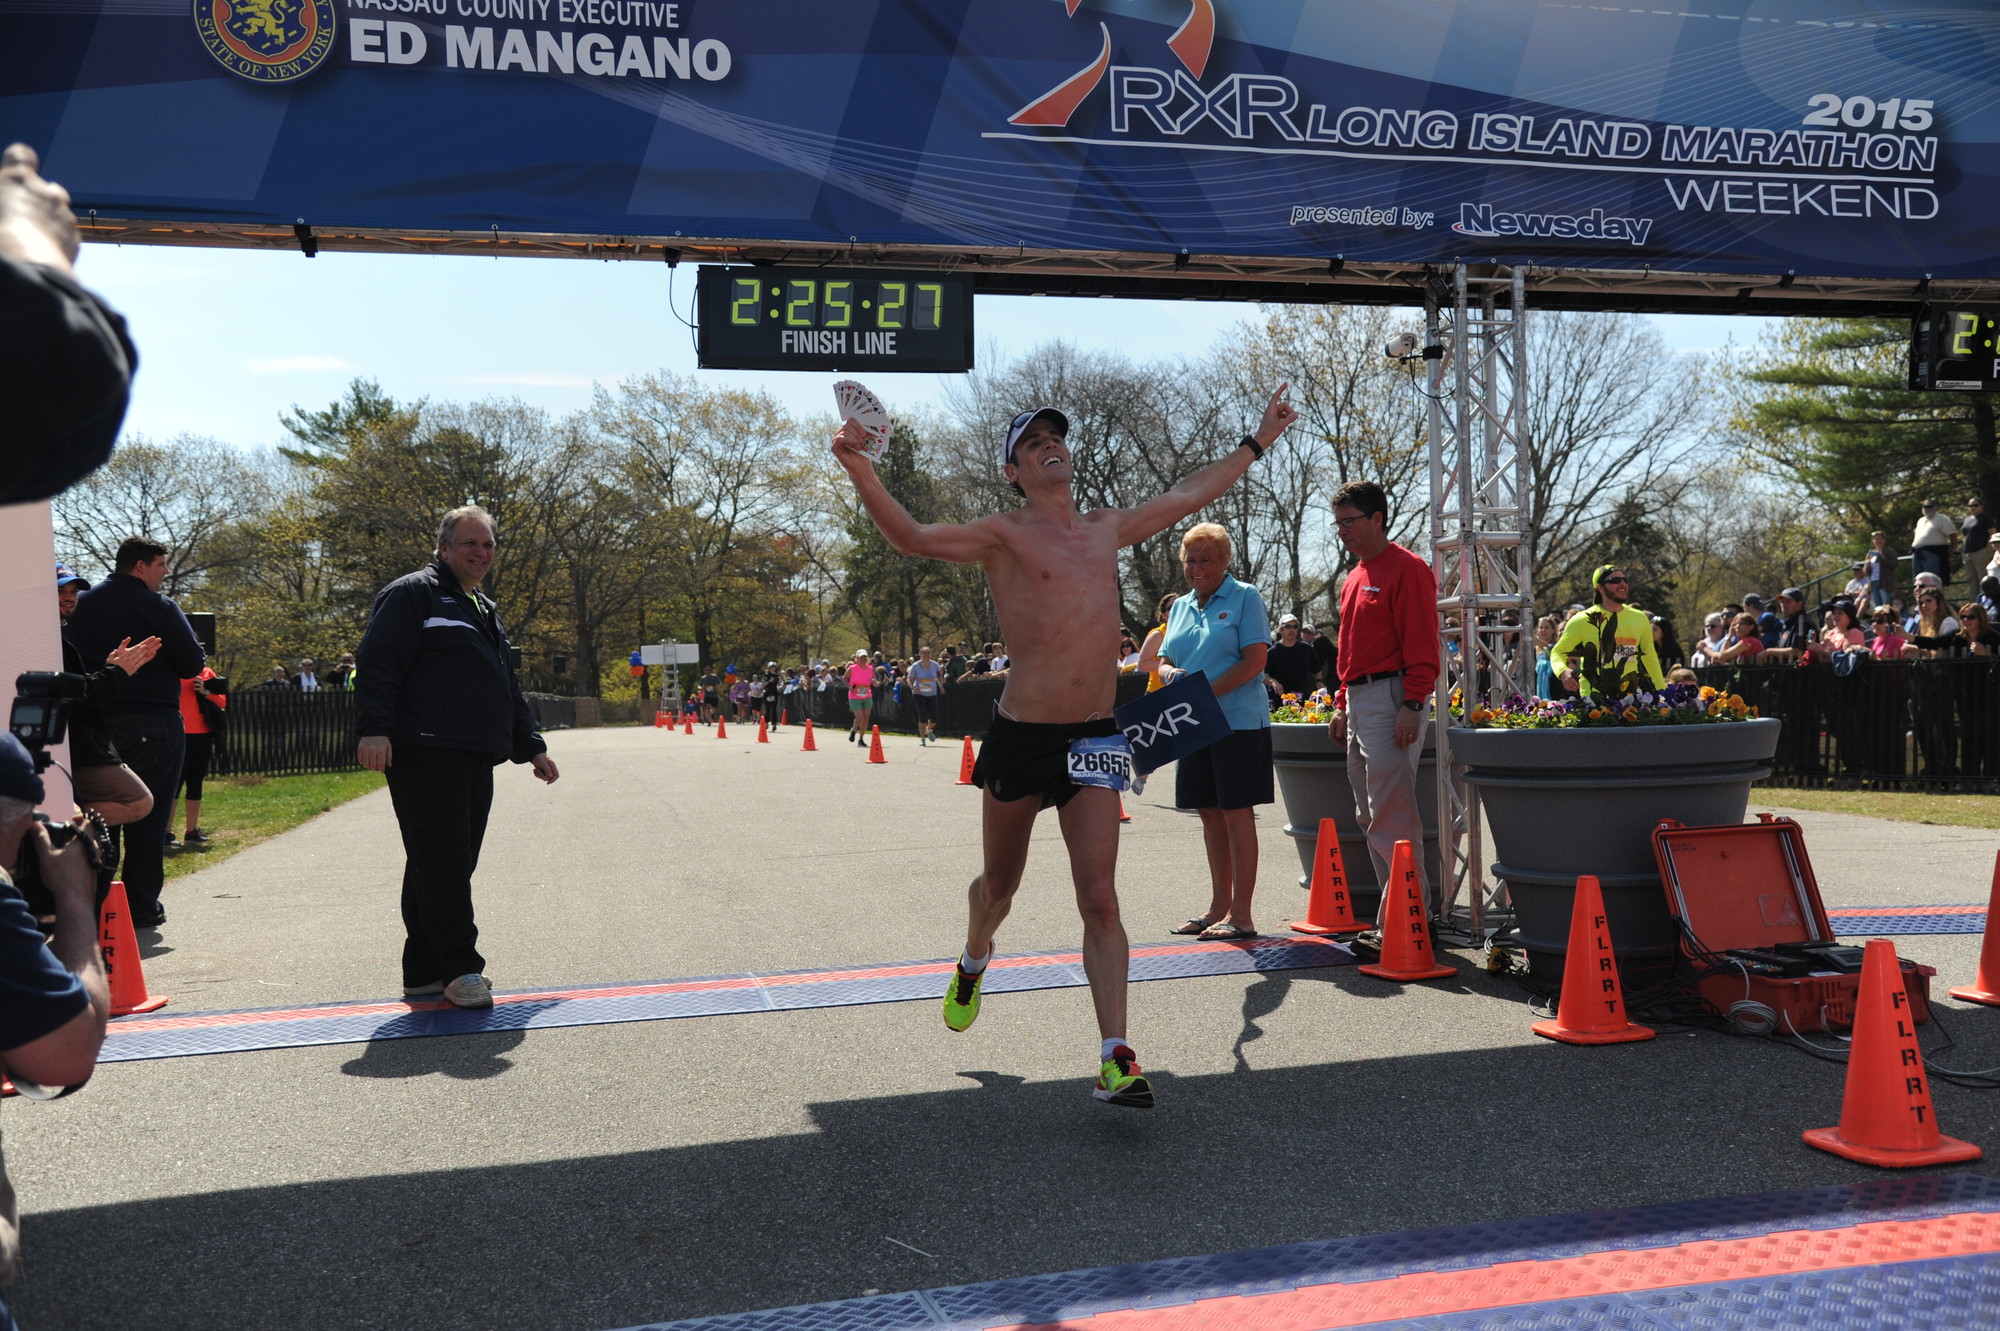 Oz Pearlman, of Manhattan, was the full marathon winner.